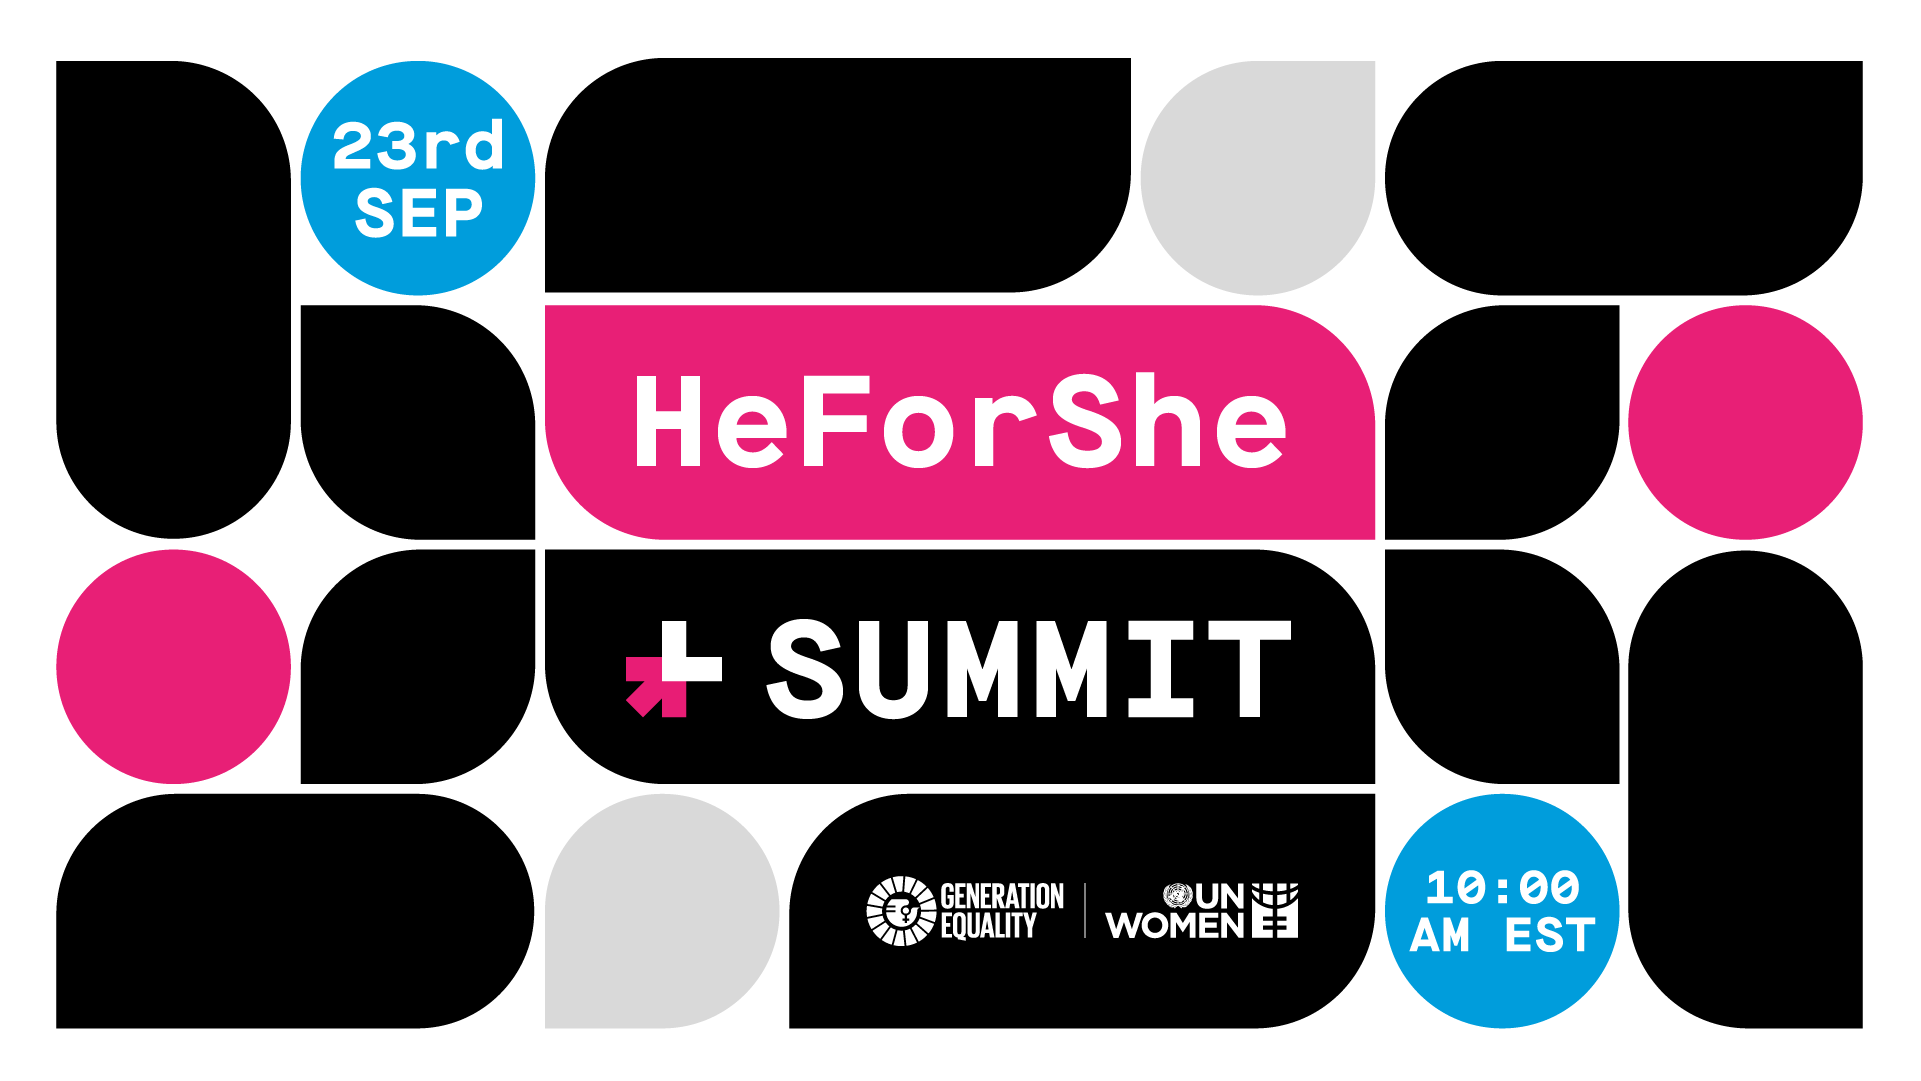 HeForShe Summit